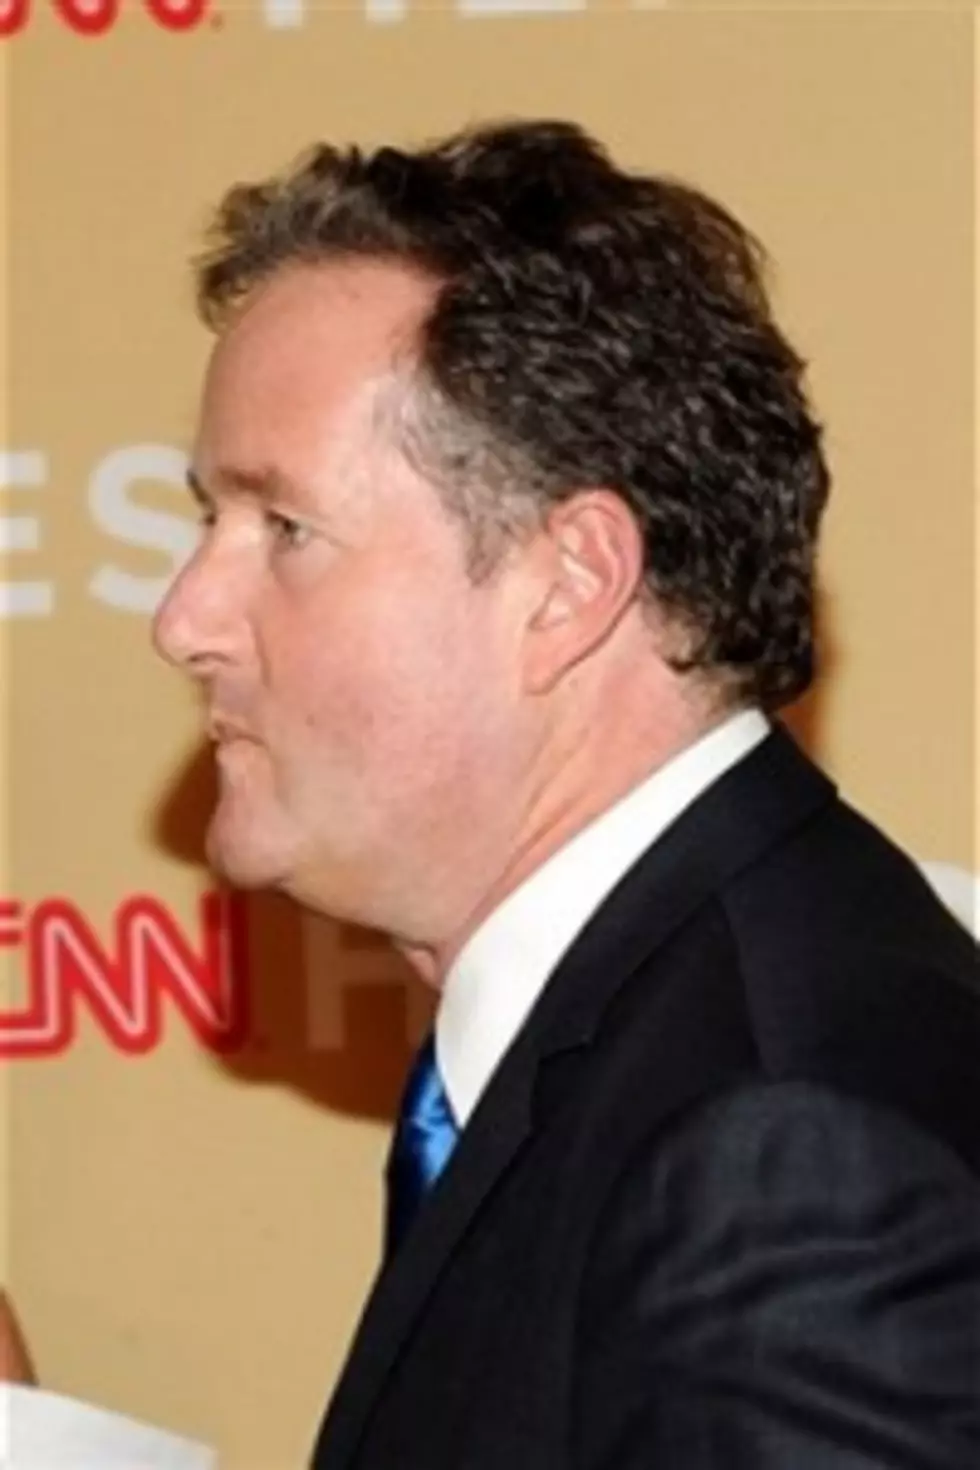 Top 5 Reasons CNN Canceled Piers Morgan Talk Show [GLENN REACTS]